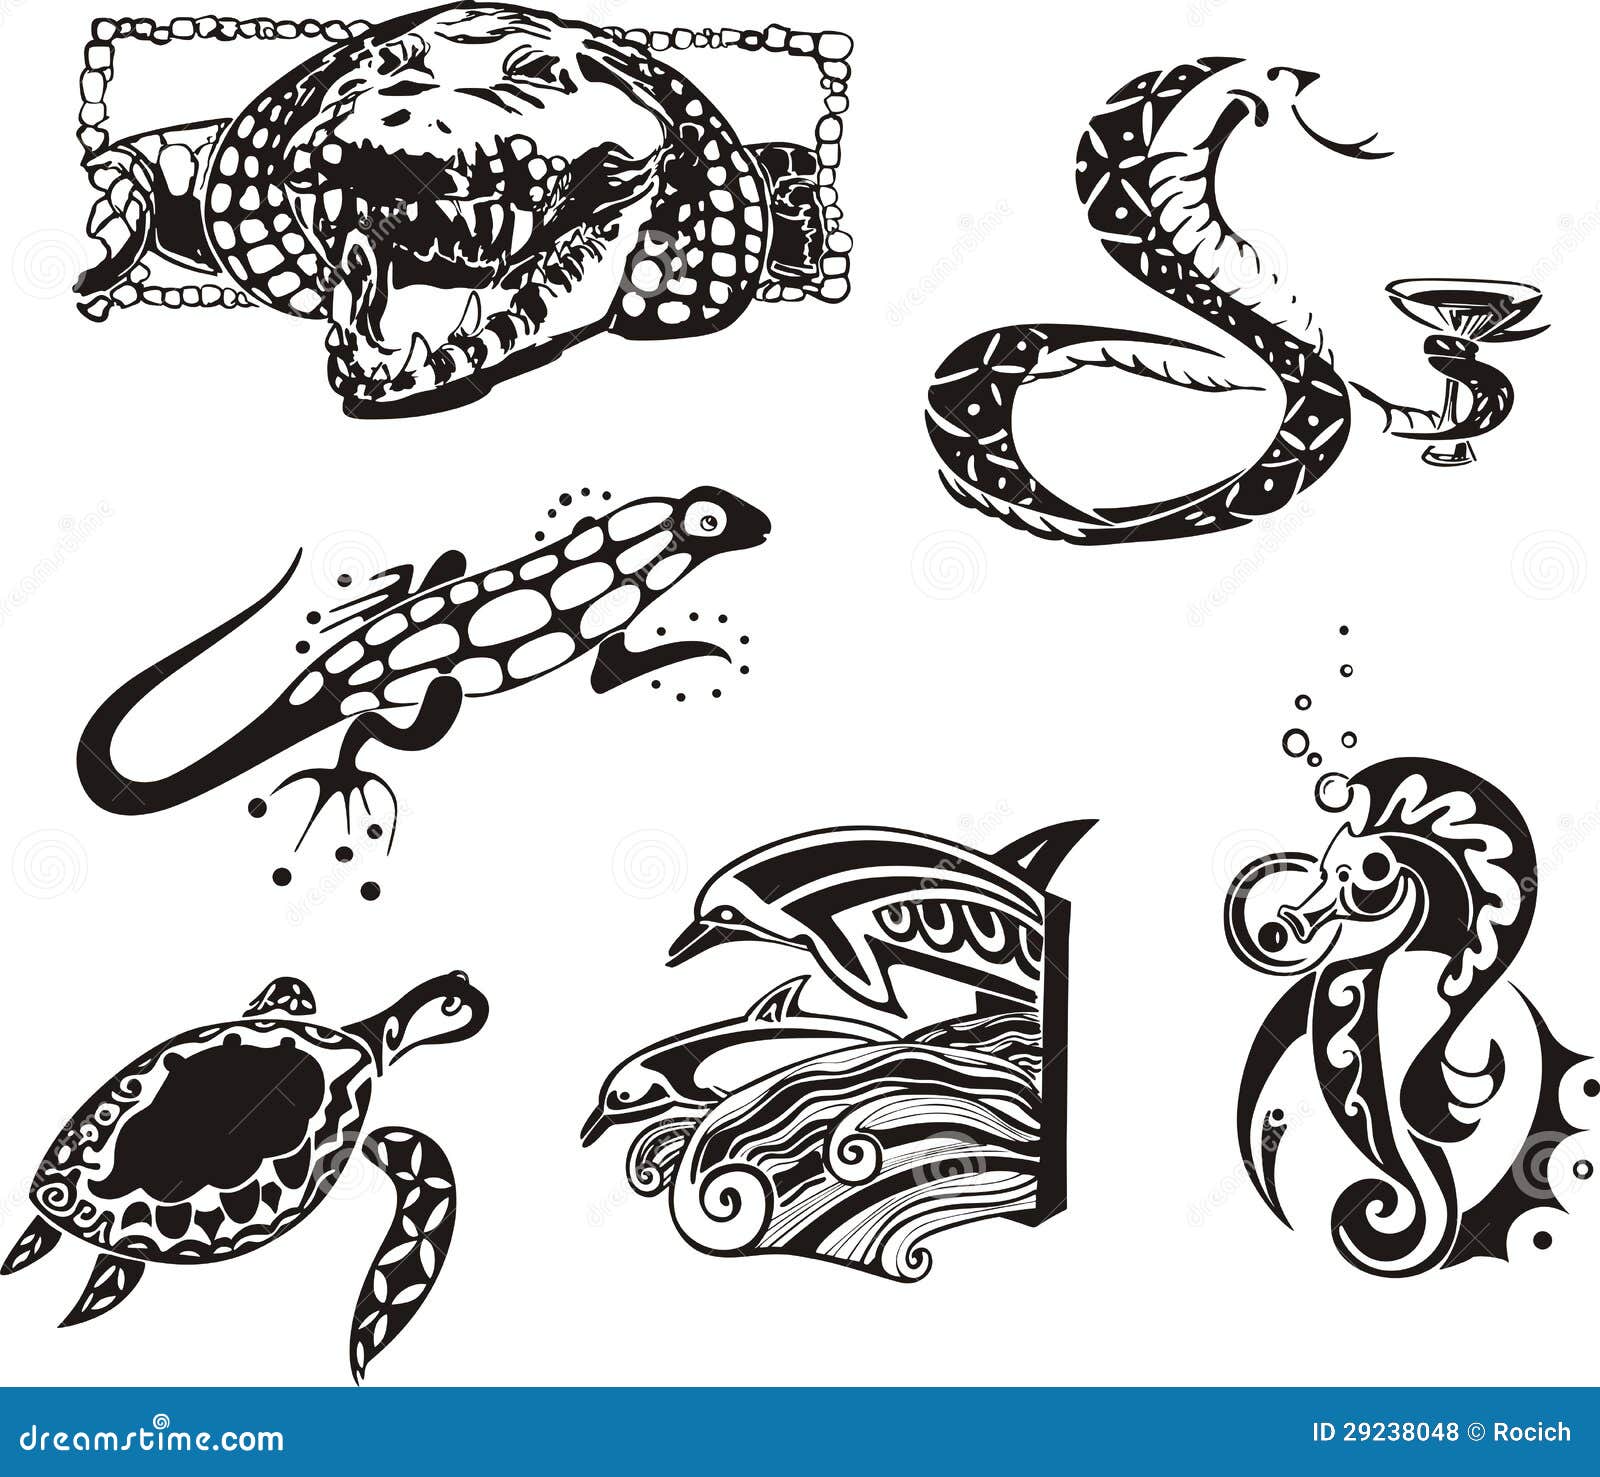 39,235 Reptiles Sketch Images, Stock Photos & Vectors | Shutterstock